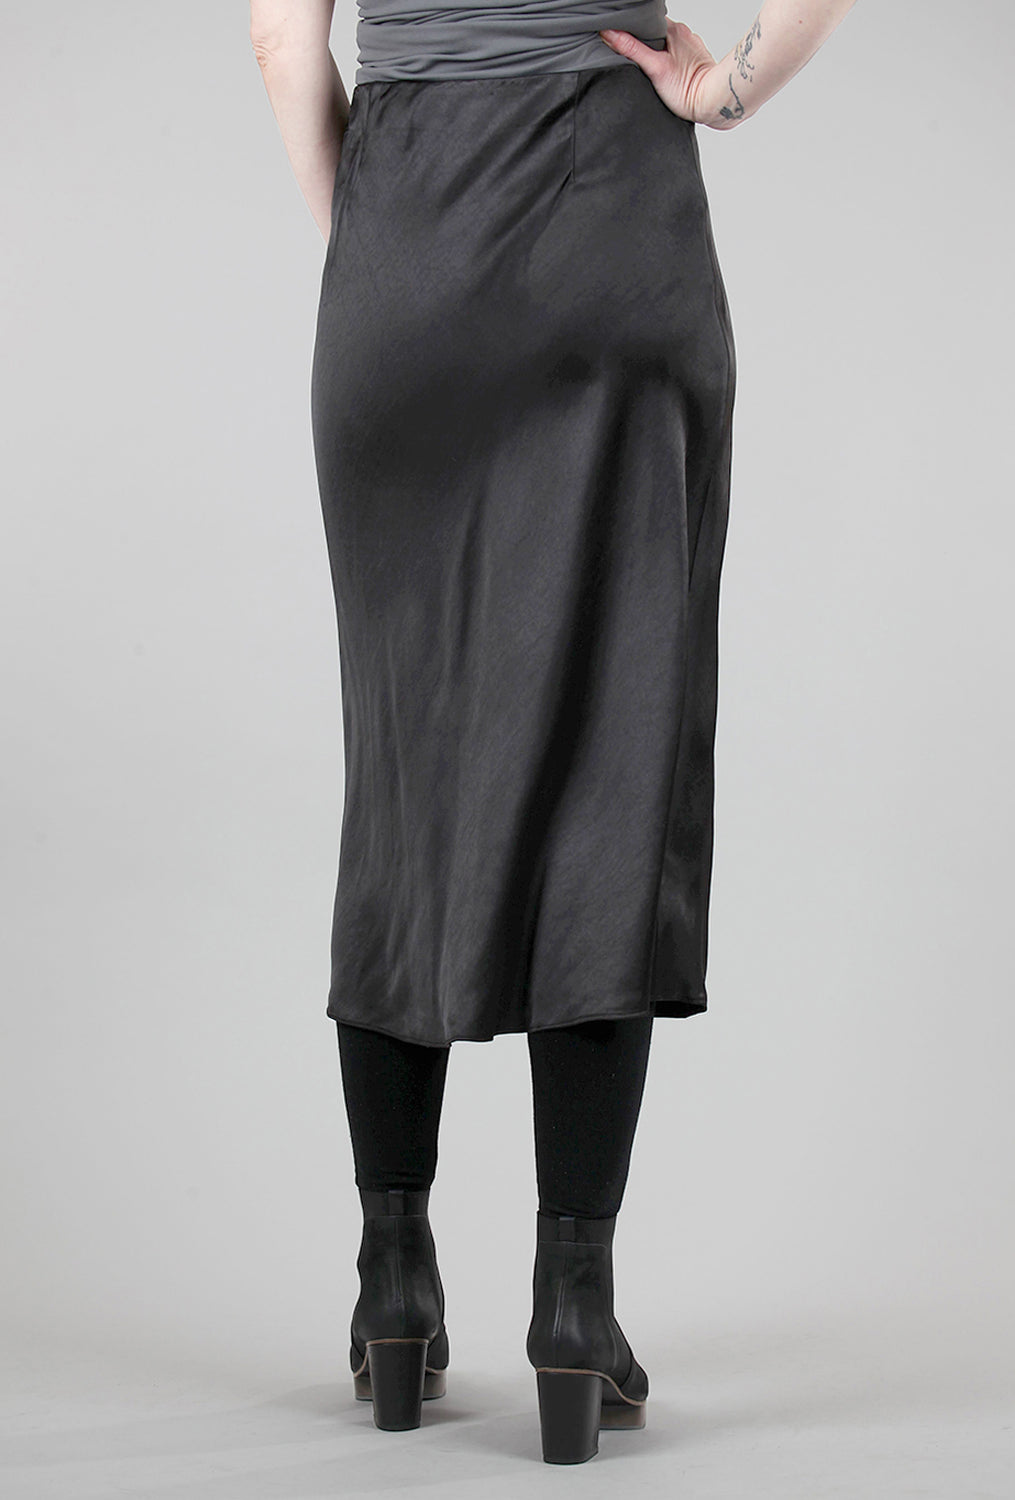 Lilla P Bias-Cut Sateen Skirt, Black 